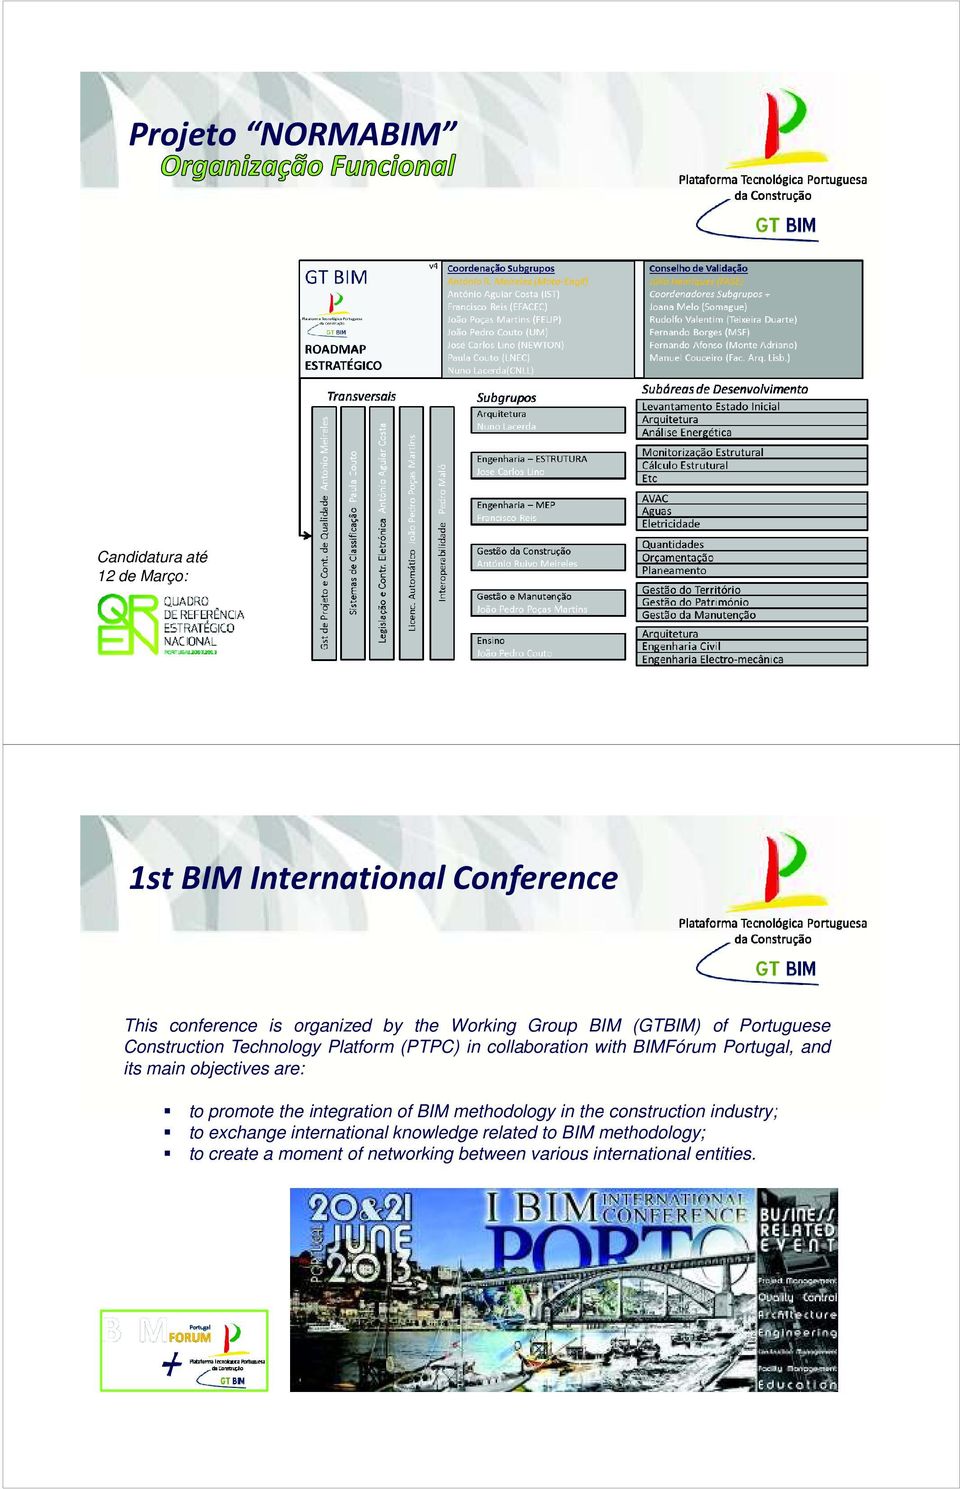 of BIM methodology in the construction industry; to promote the integration of BIM methodology in the construction industry;